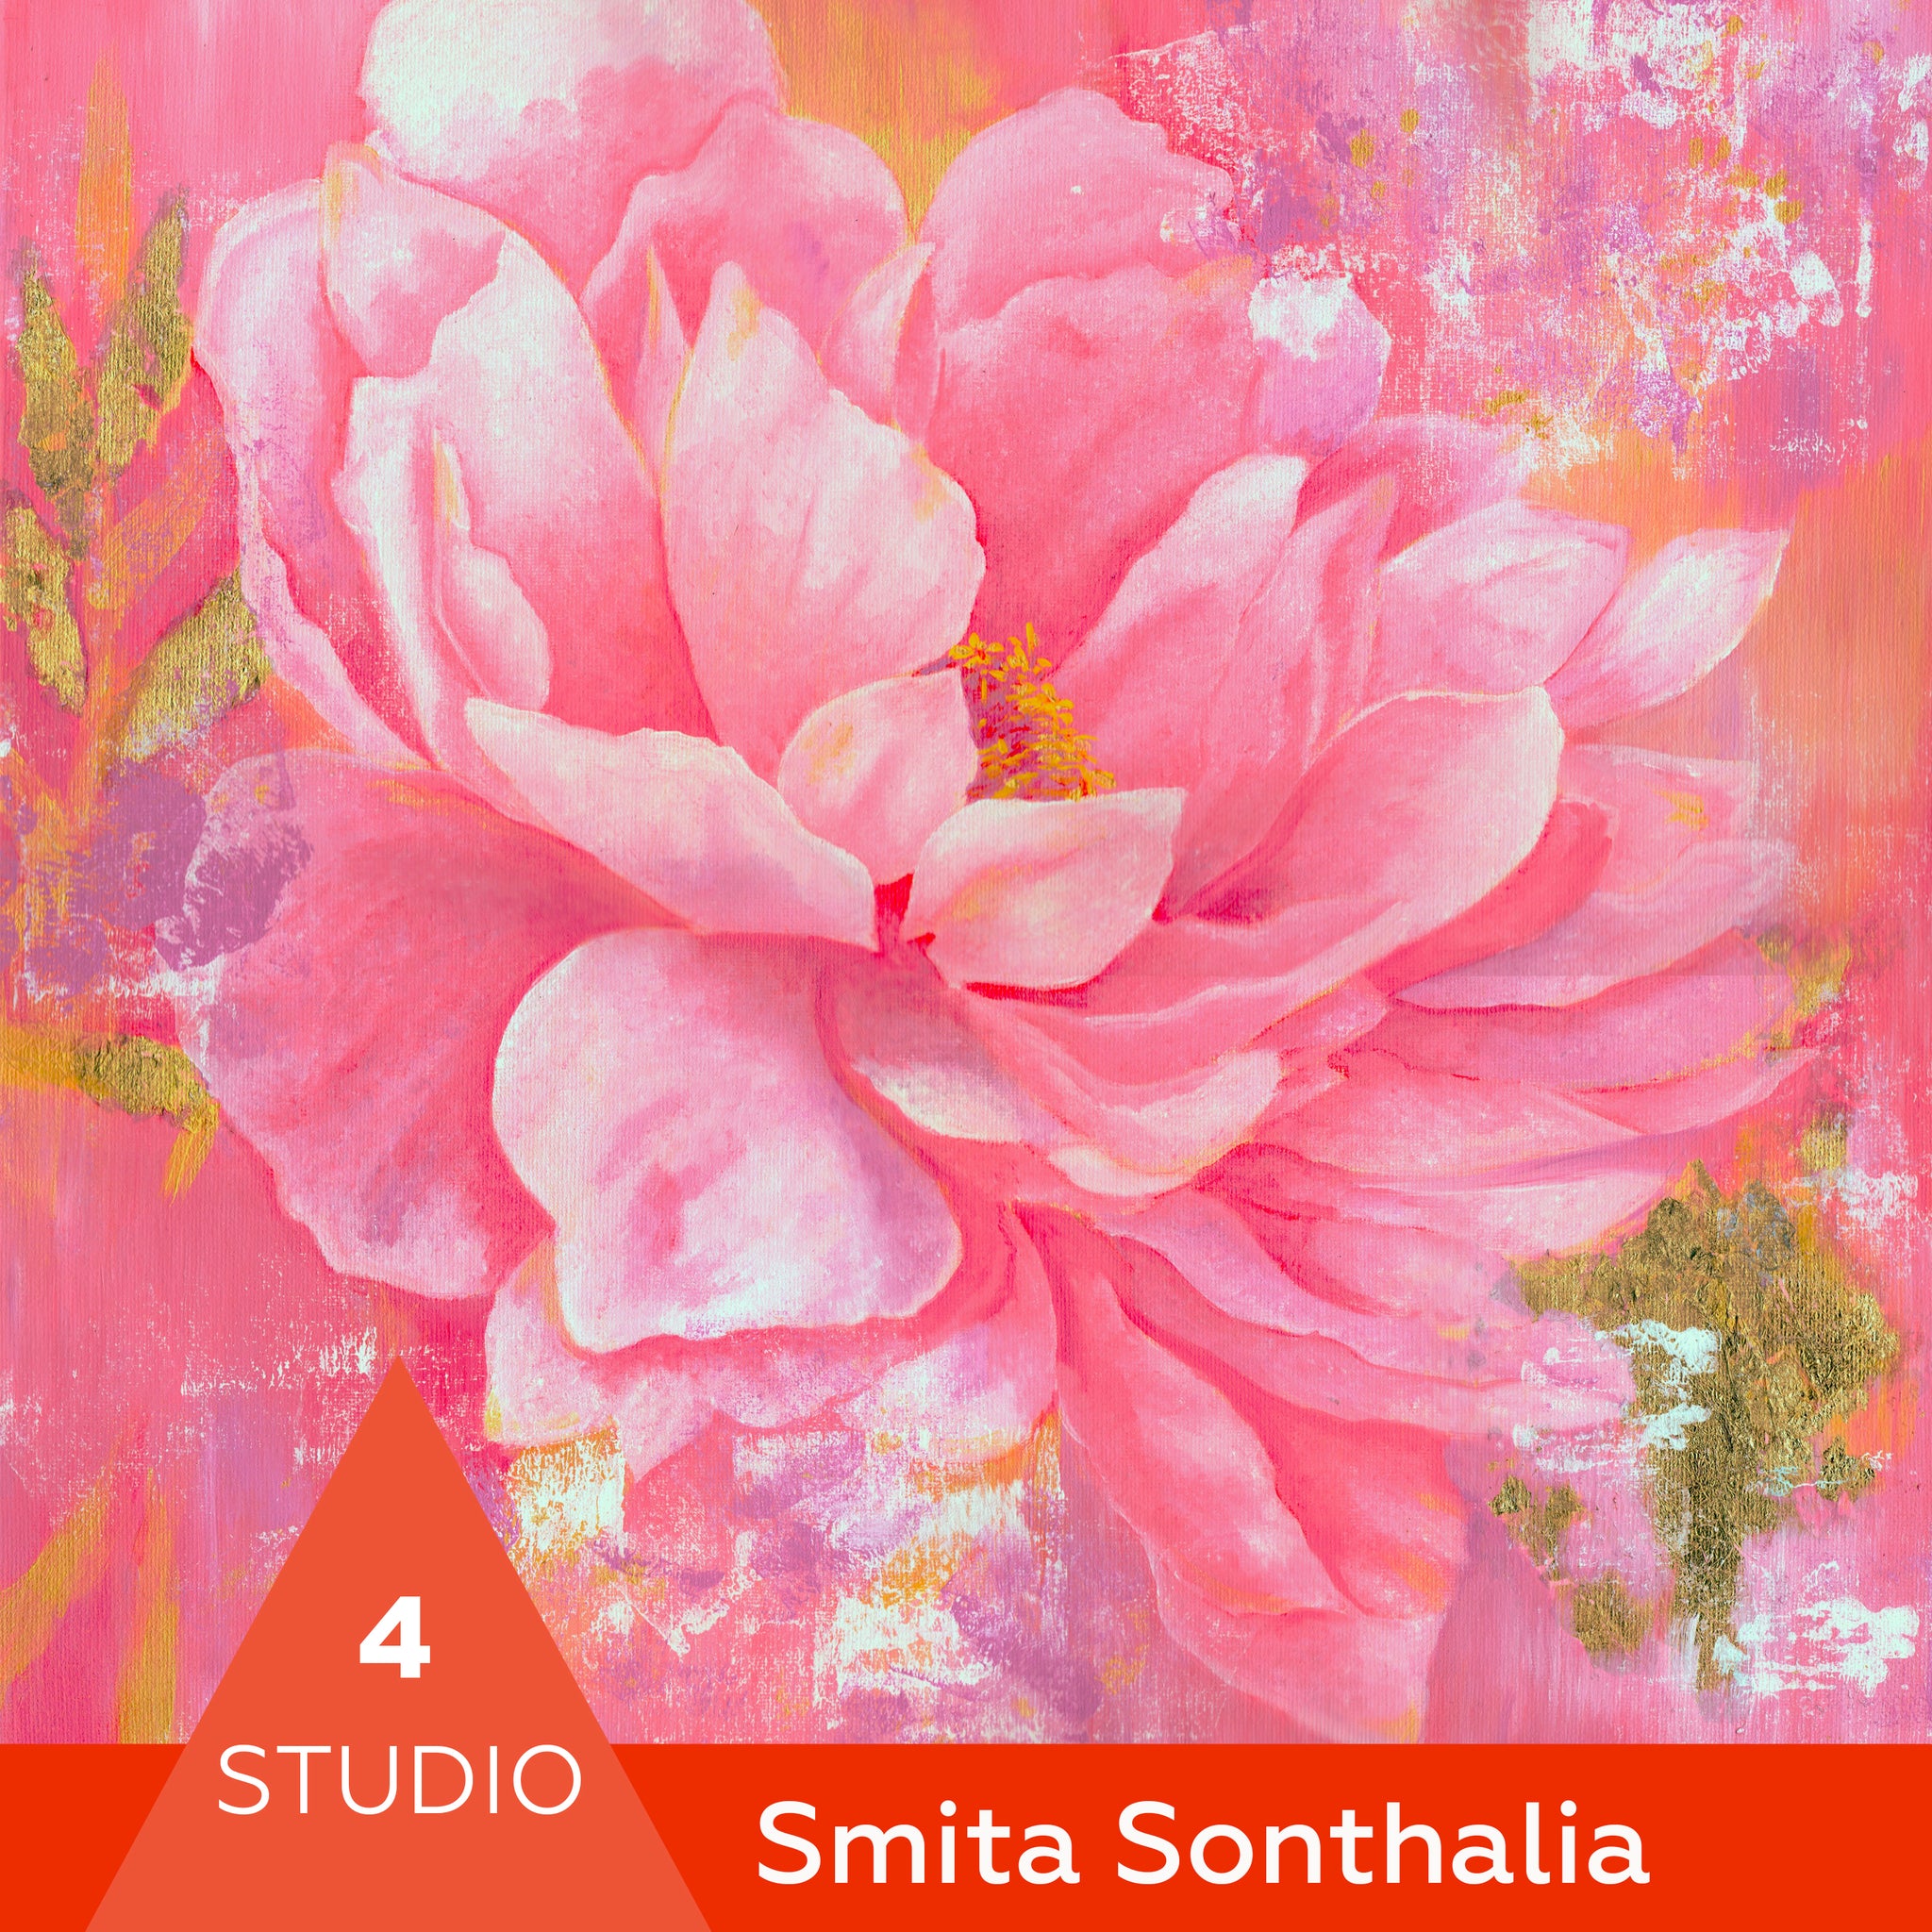 Skylark Galleries artist Smita Sonthalia is taking part in harrow open studios 2022